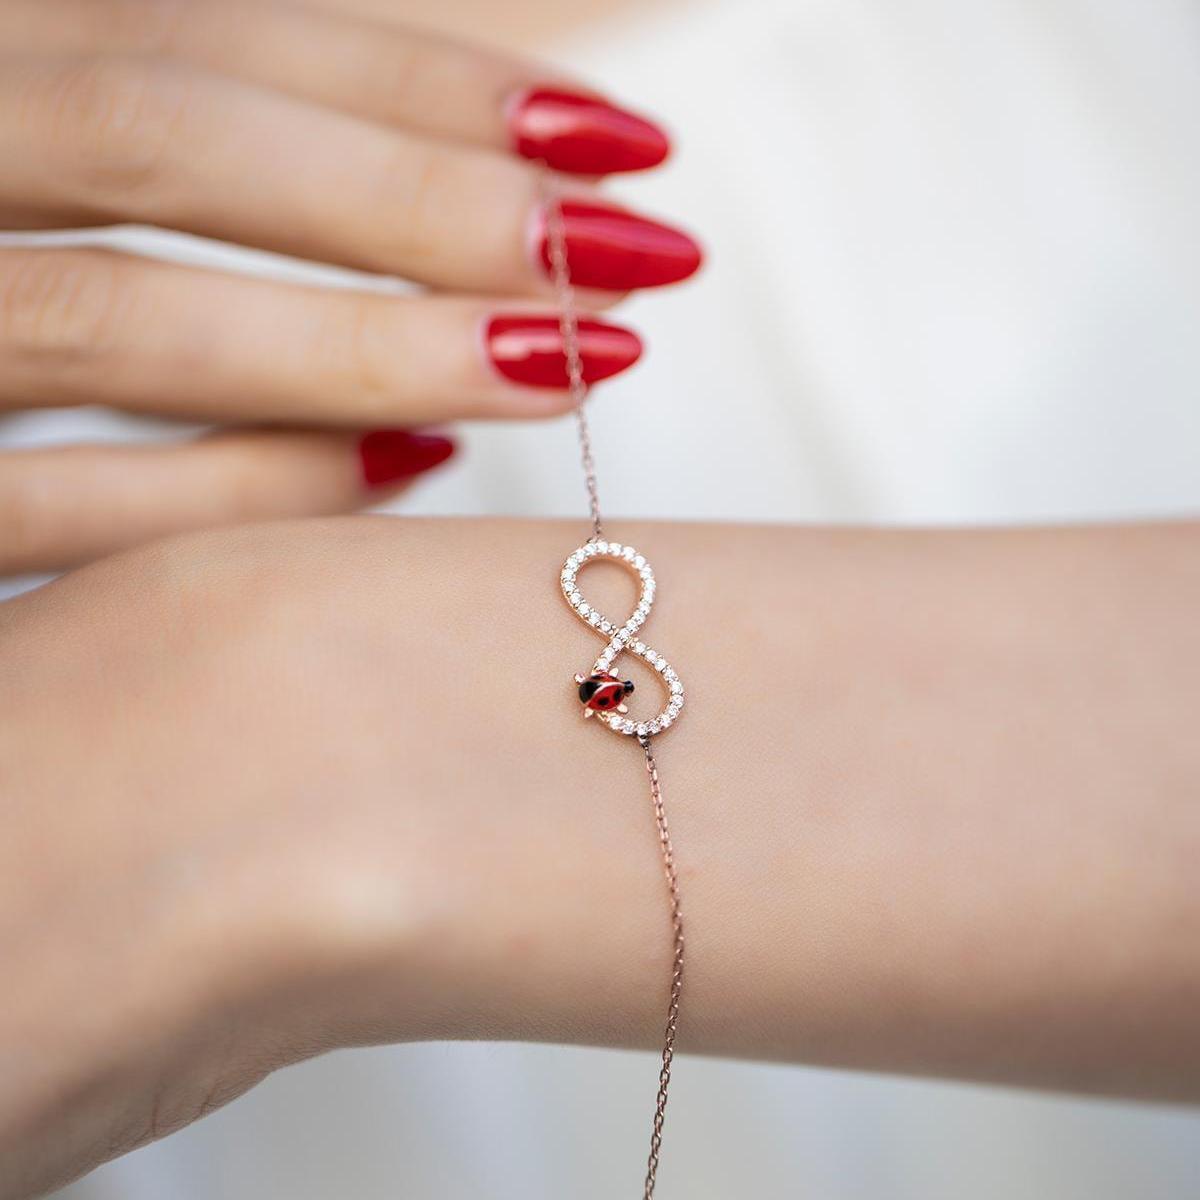 Ladybug Bracelet 14K Gold • Ladybug Charm Infinity Symbol Bracelet - Trending Silver Gifts